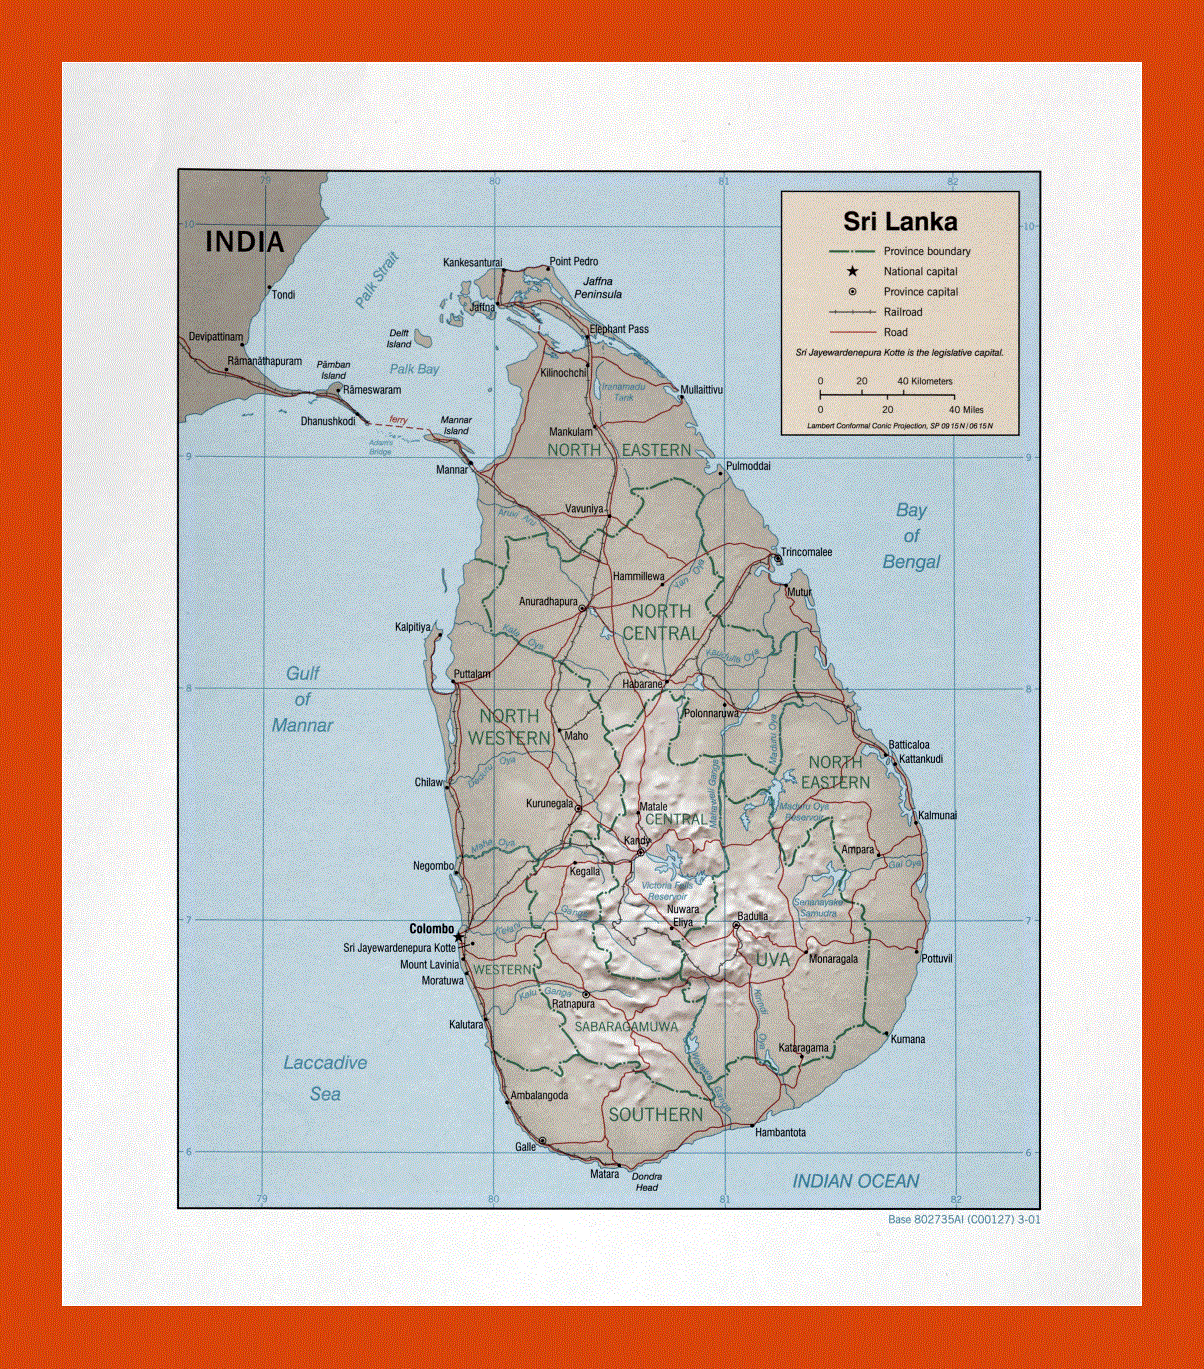 Political and administrative map of Sri Lanka - 2001